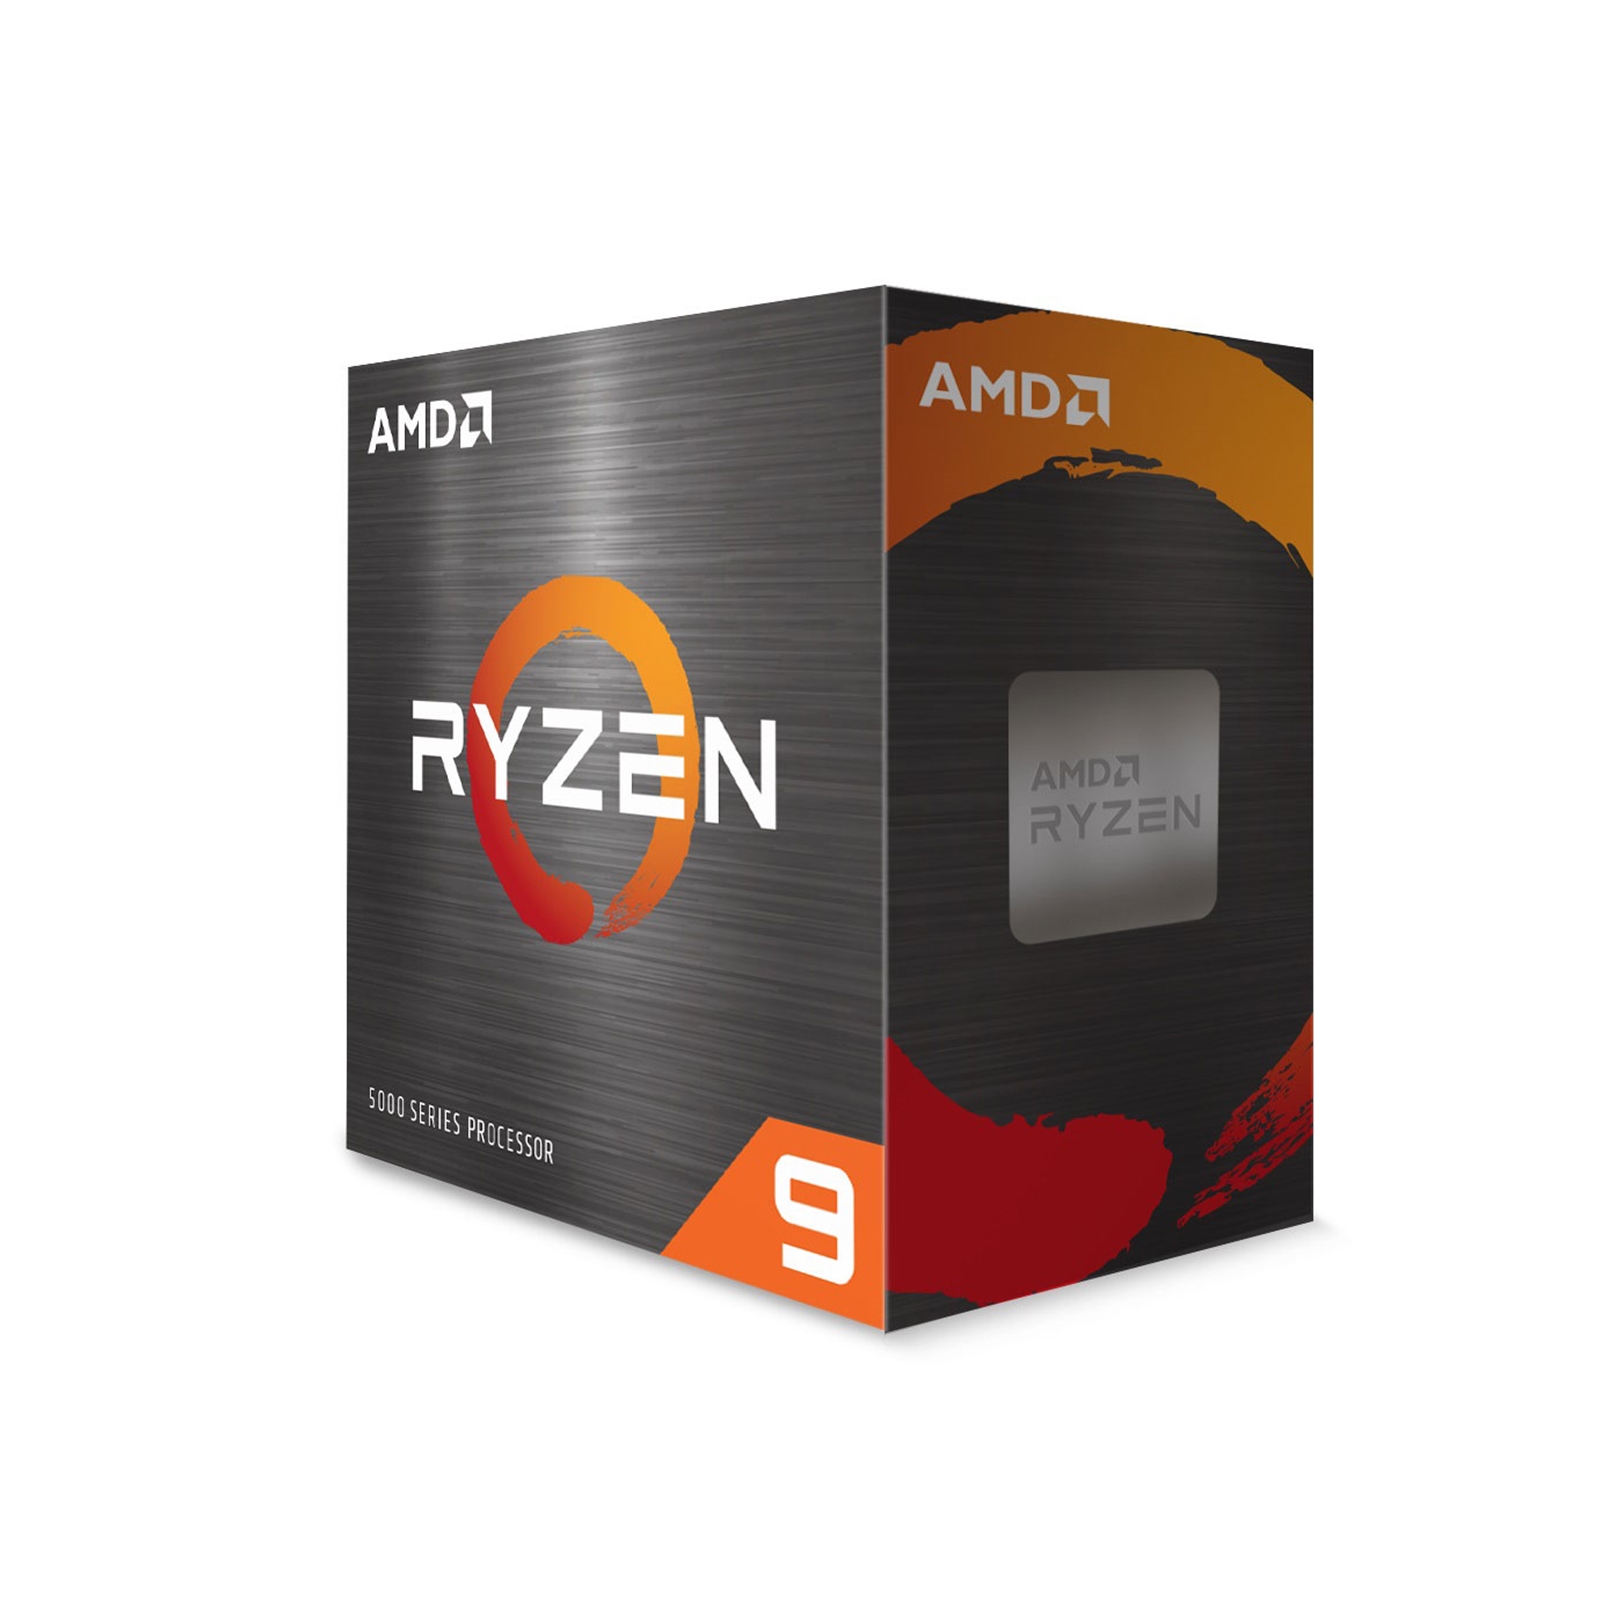 AMD Ryzen 9 5900X 3.7GHz 12 Core AM4 Processor